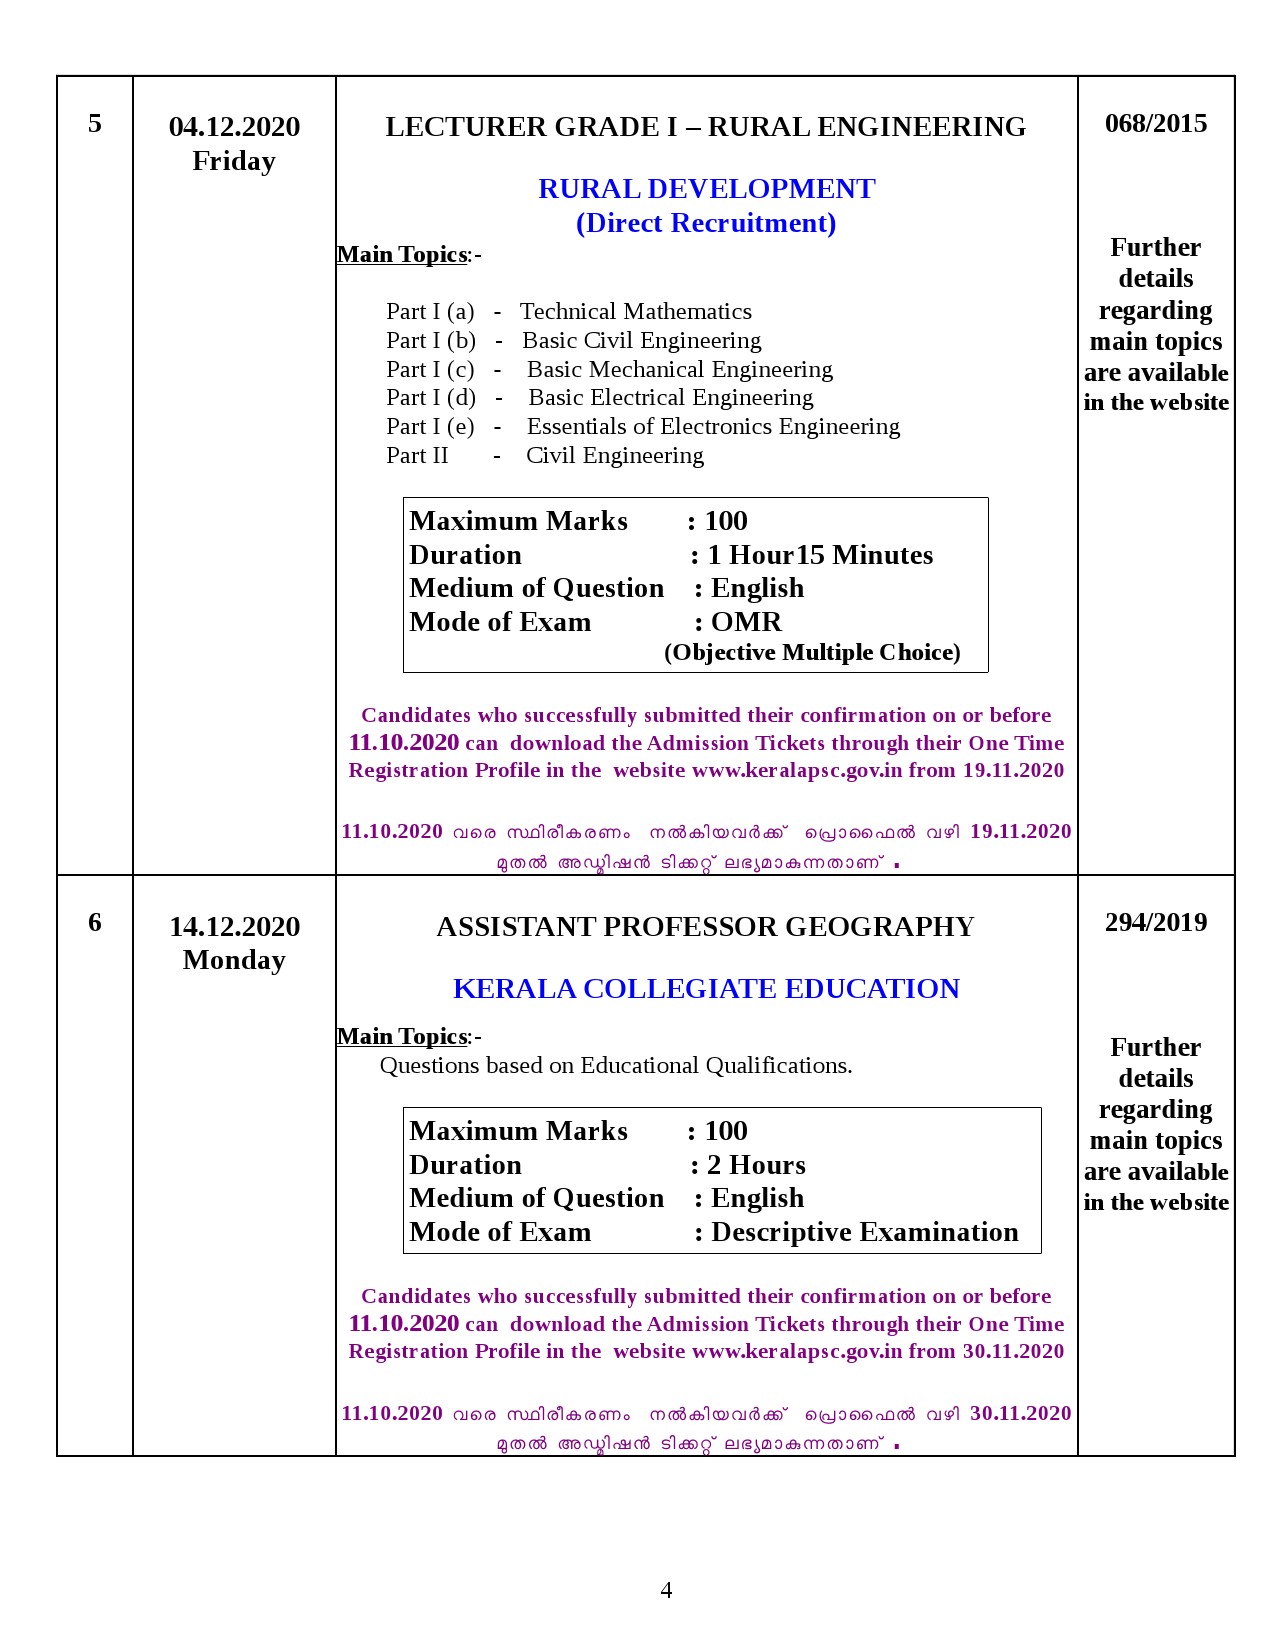 Kerala PSC Exam Calendar for December 2020 - Notification Image 4